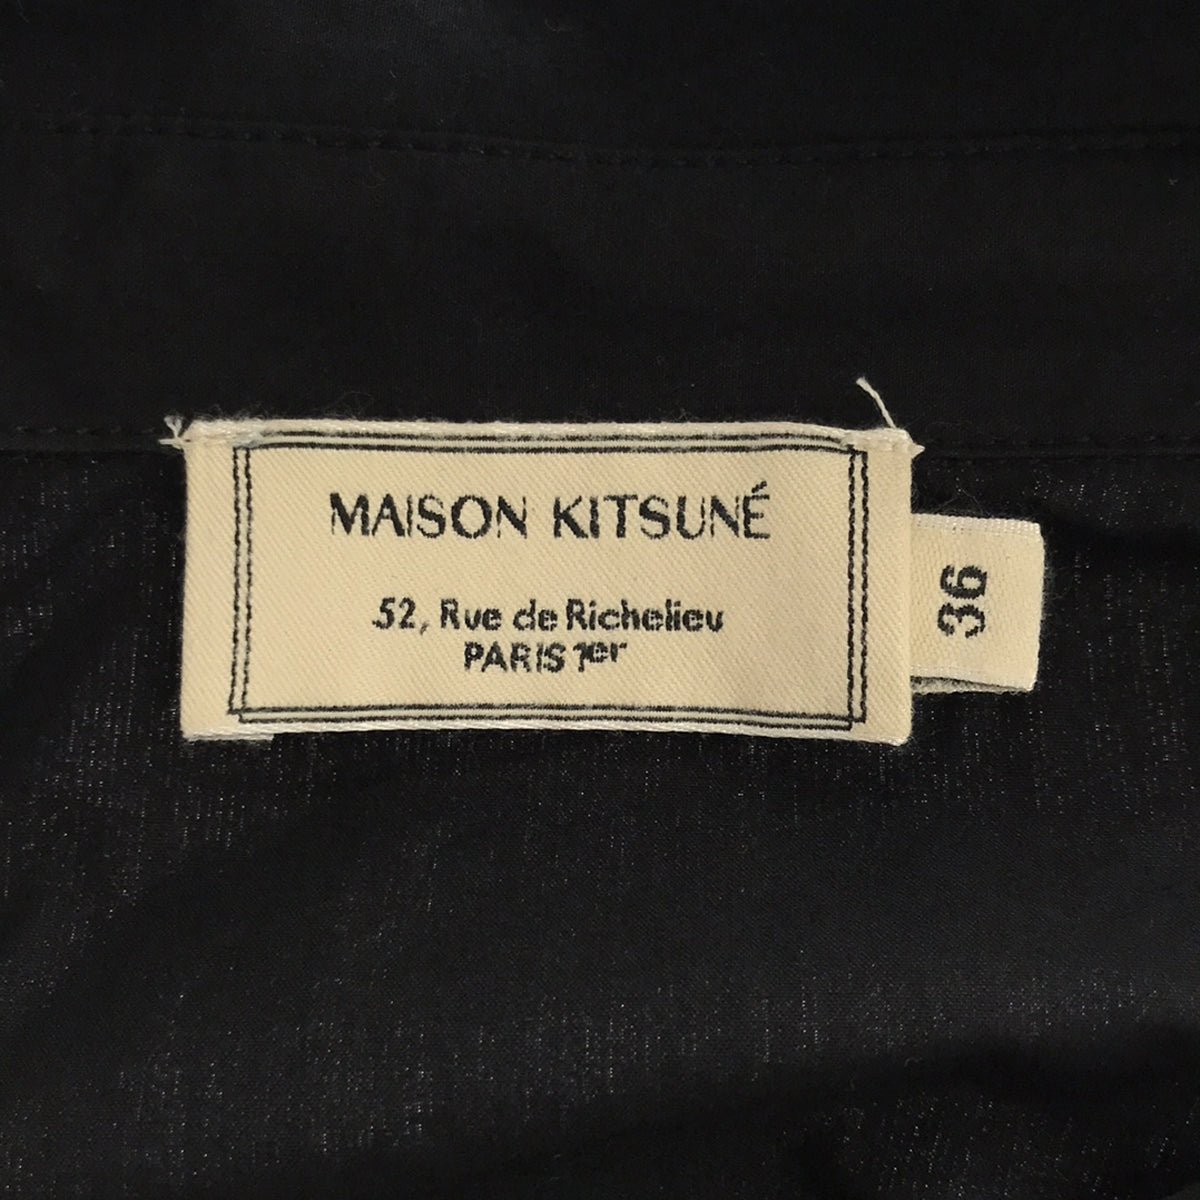 MAISON KITSUNE / メゾンキツネ | 変形 ギャザー ワイドスリーブシャツ | 36 | ブラック | レディース